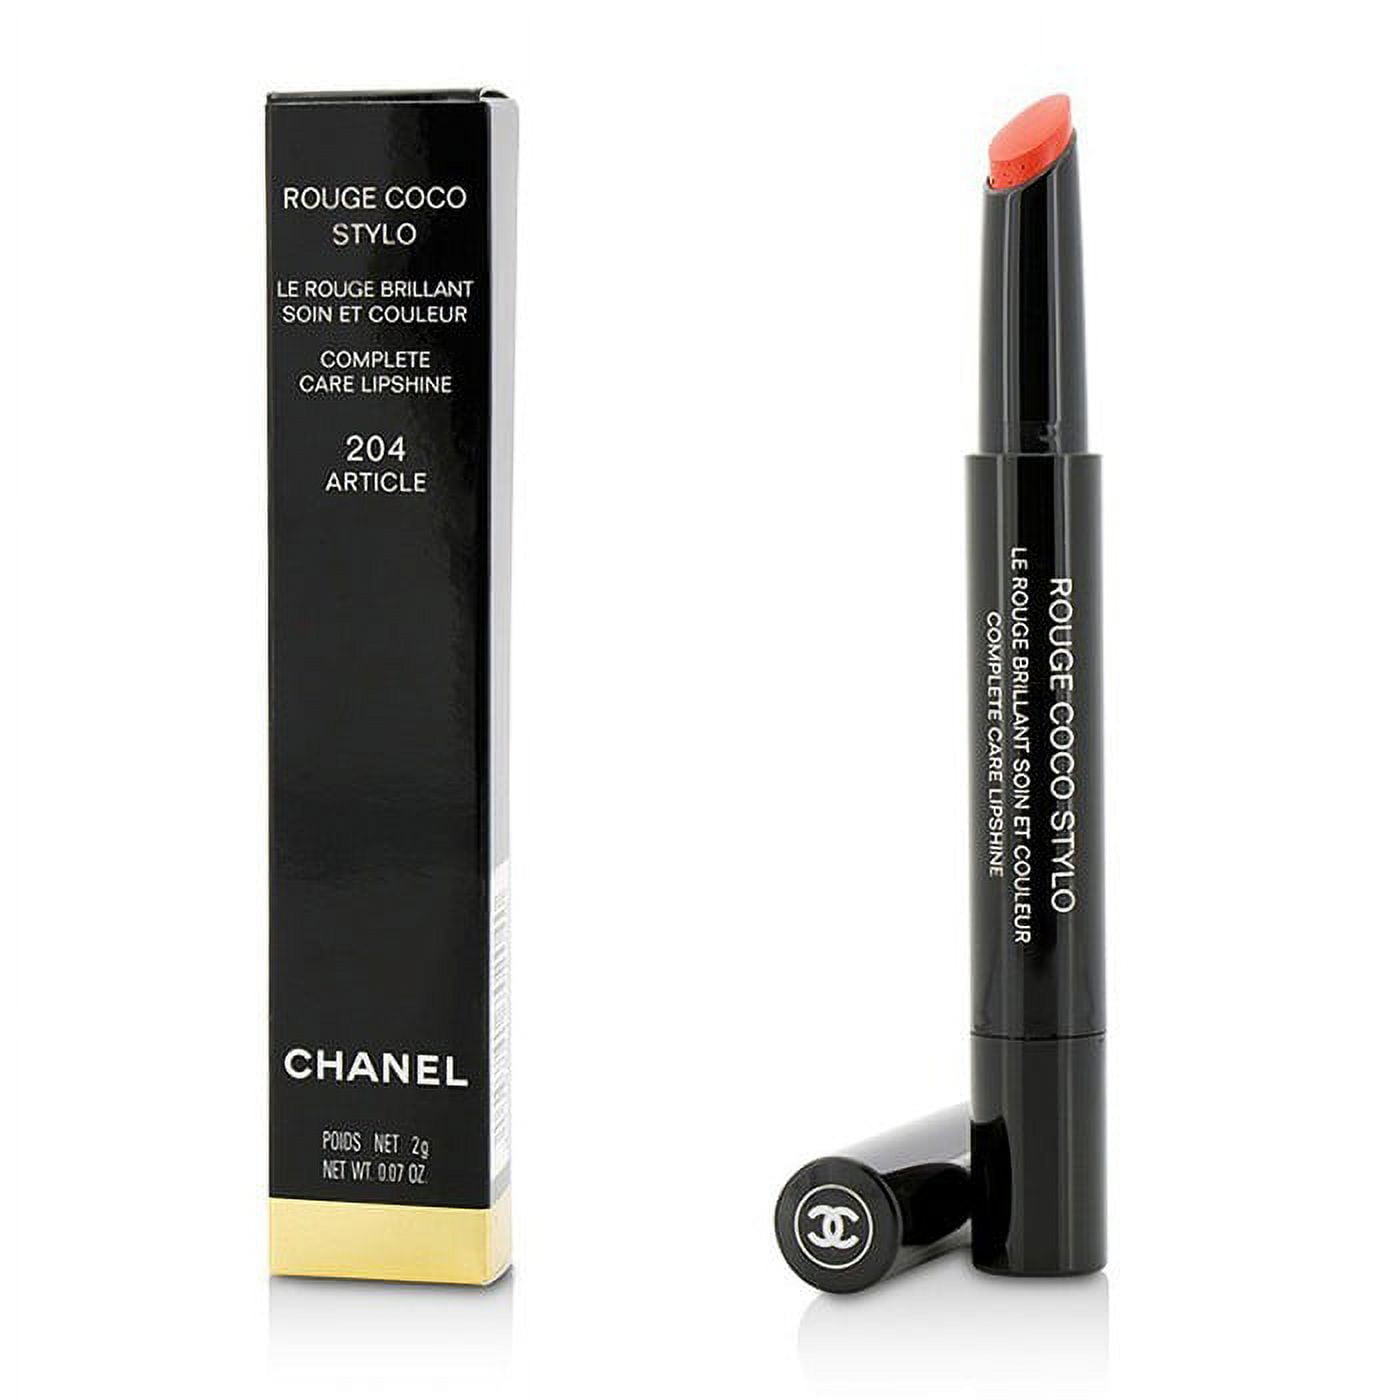 Chanel Rouge Coco Stylo Complete Care Lipshine - 204 Article 0.07 oz  Lipstick 